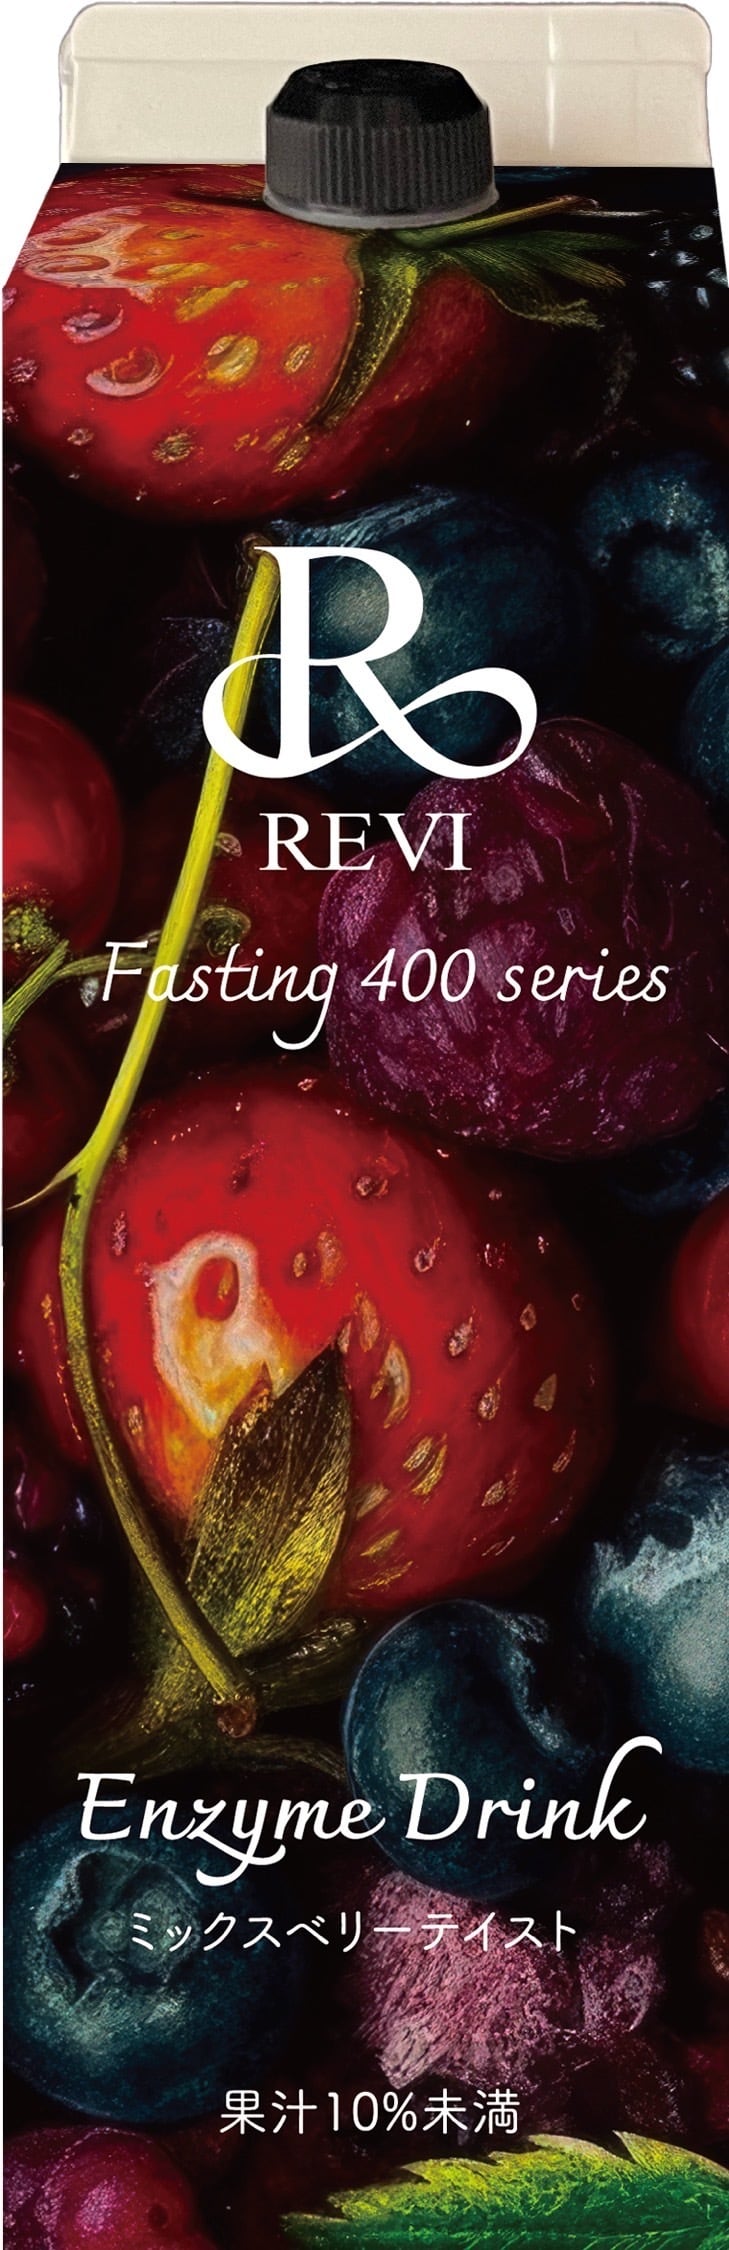 REVI ファスティング400シリーズ「Enzyme Drink」ミックスベリー